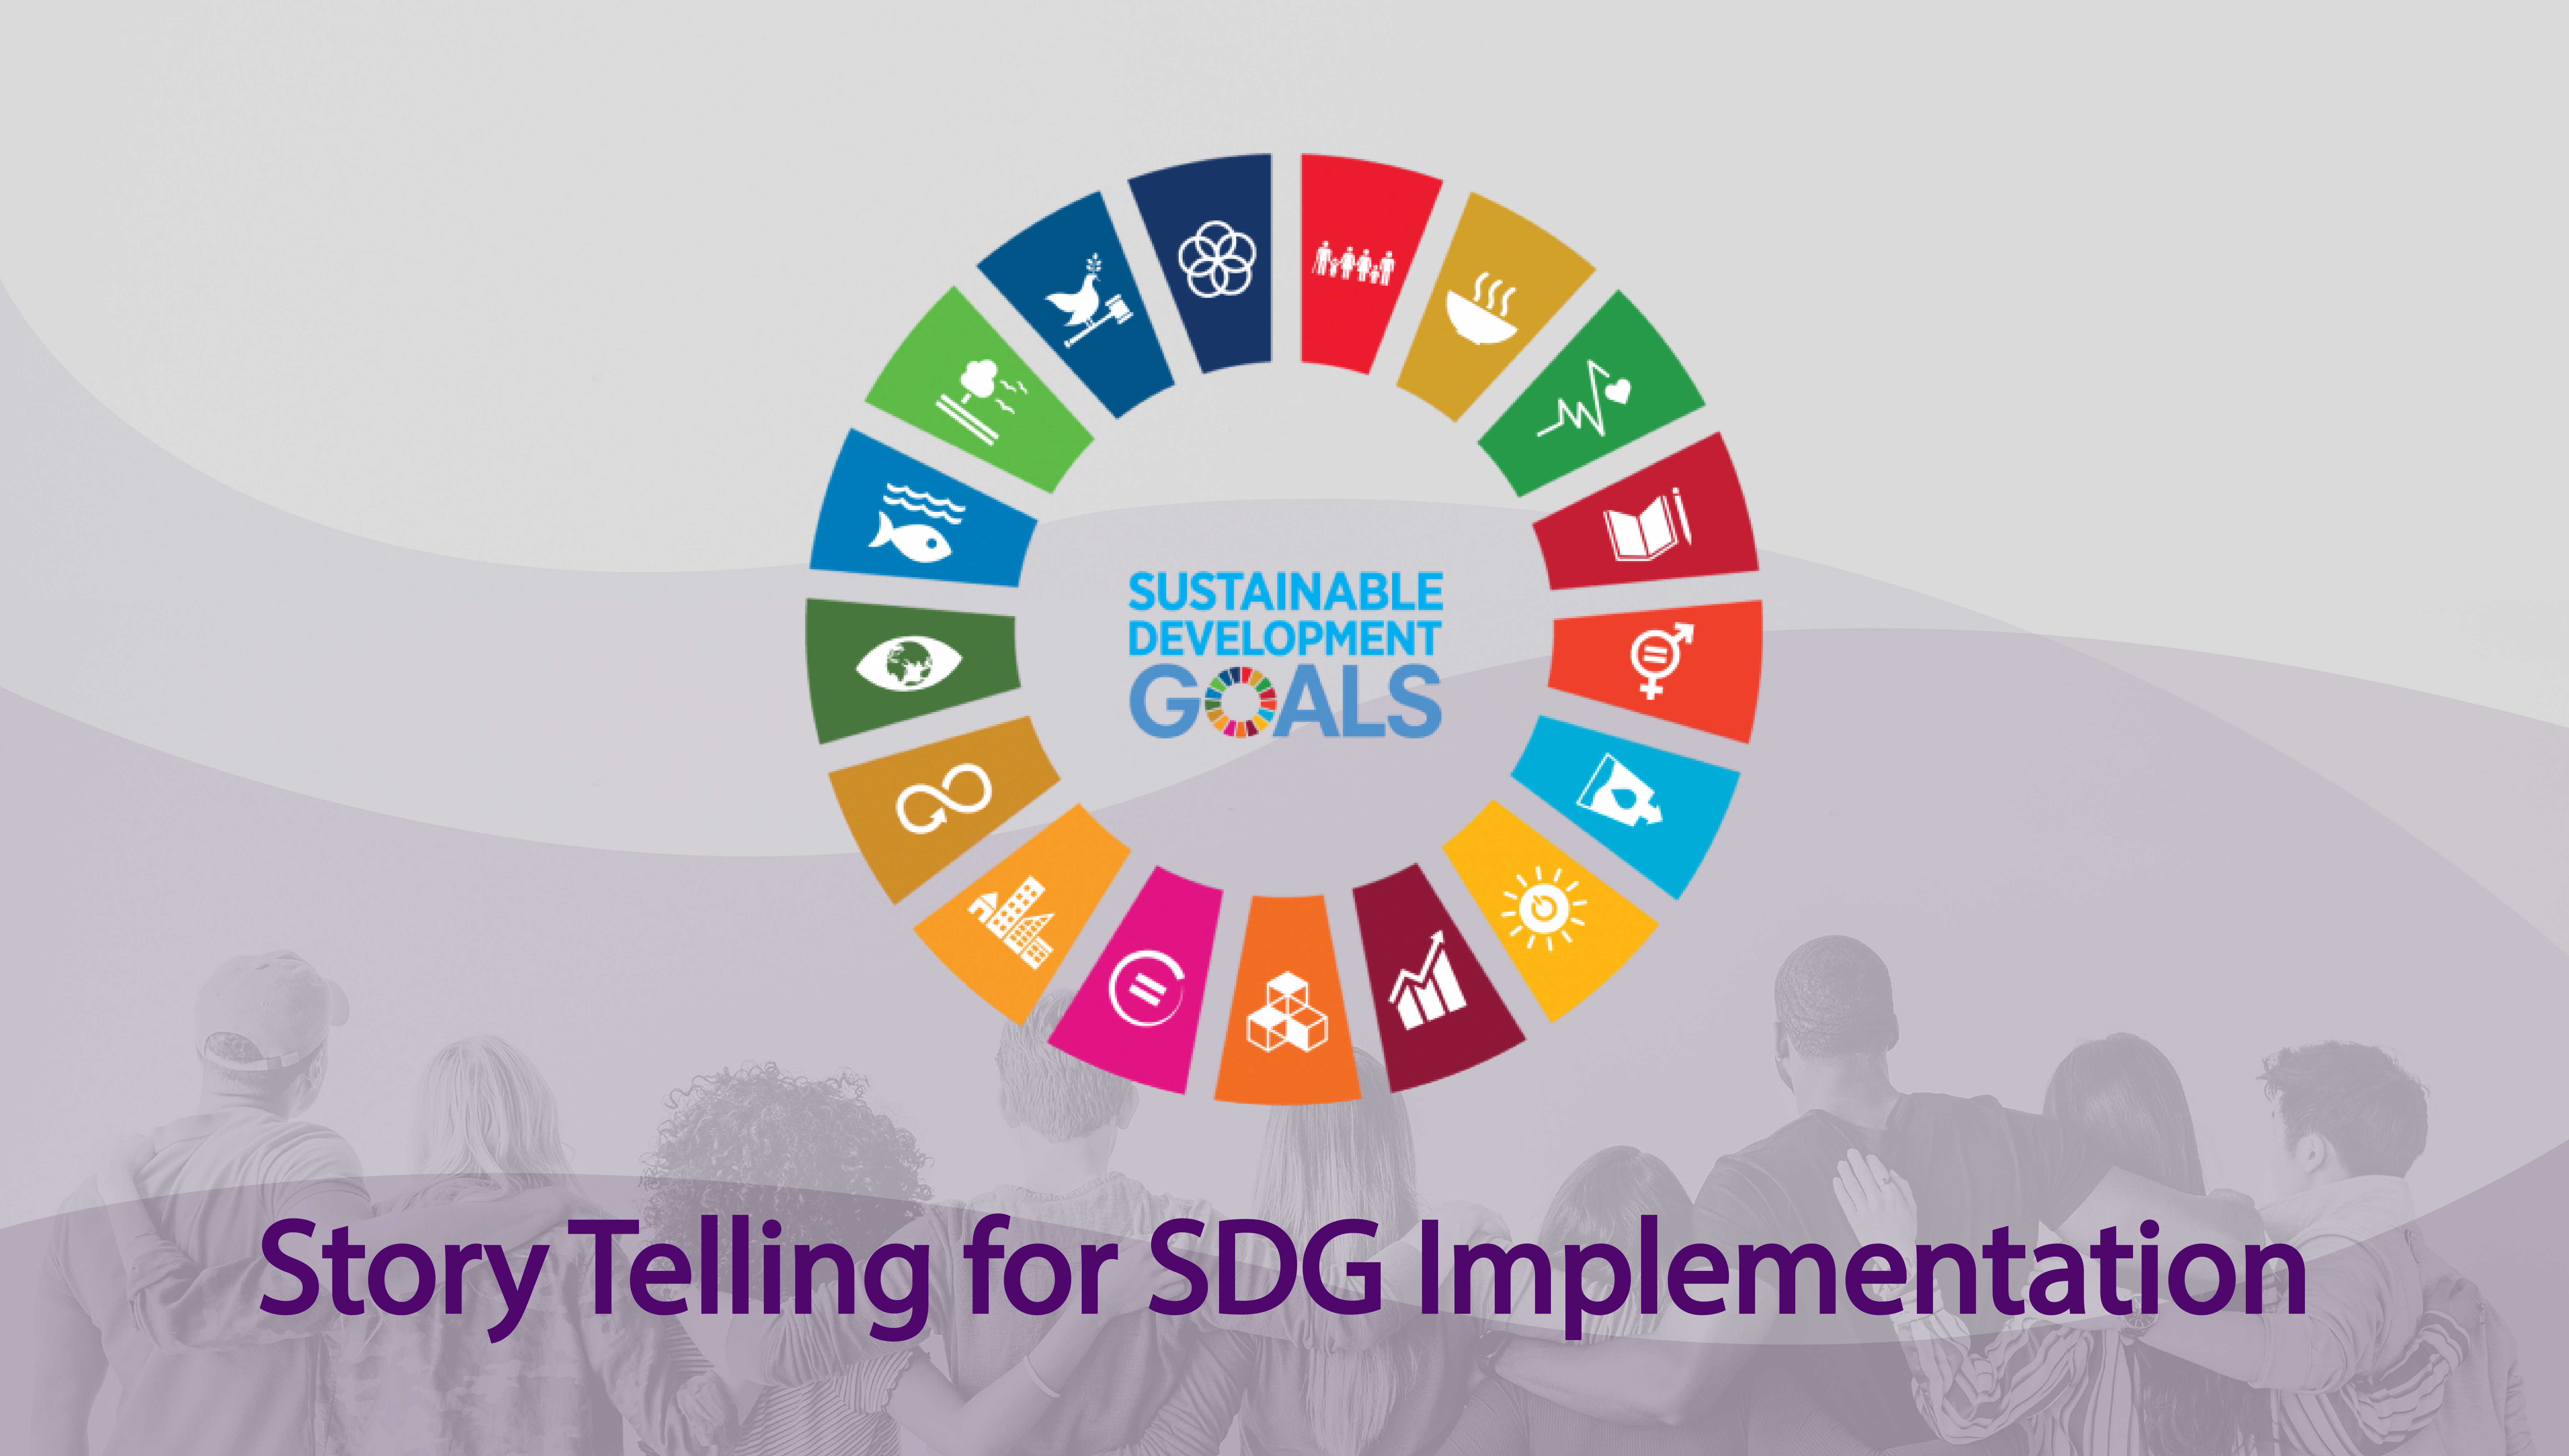 [Story Telling for SDG Implementation] Duncan Chando (MDP 2016)